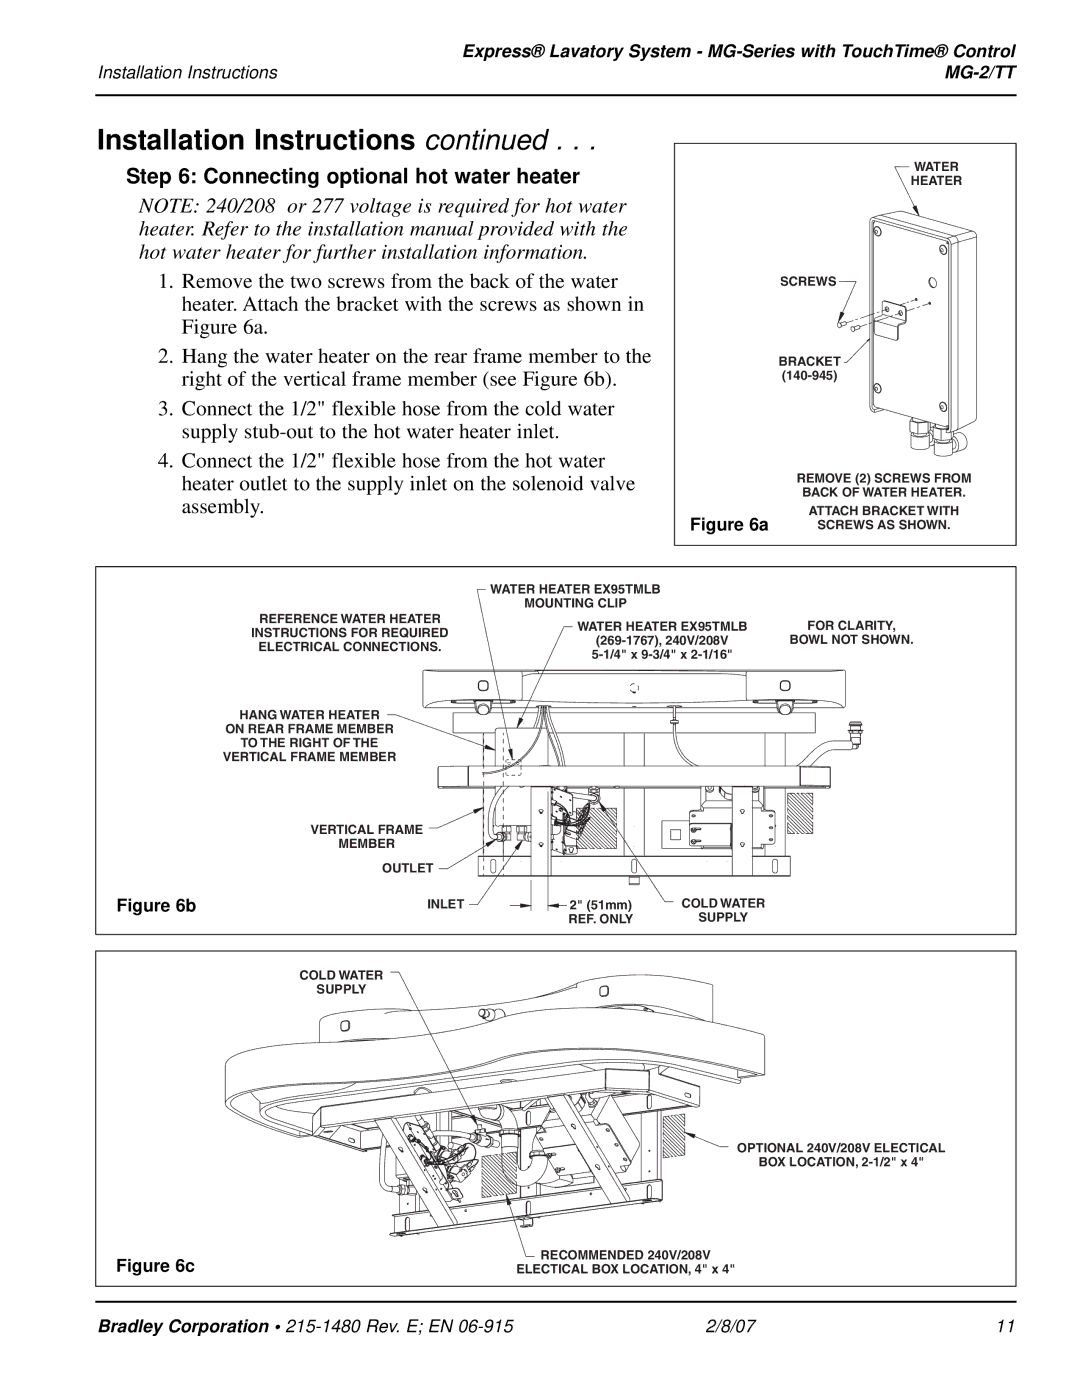 Bradley Smoker MG-2/TT installation instructions Connecting optional hot water heater, Screws AS Shown 